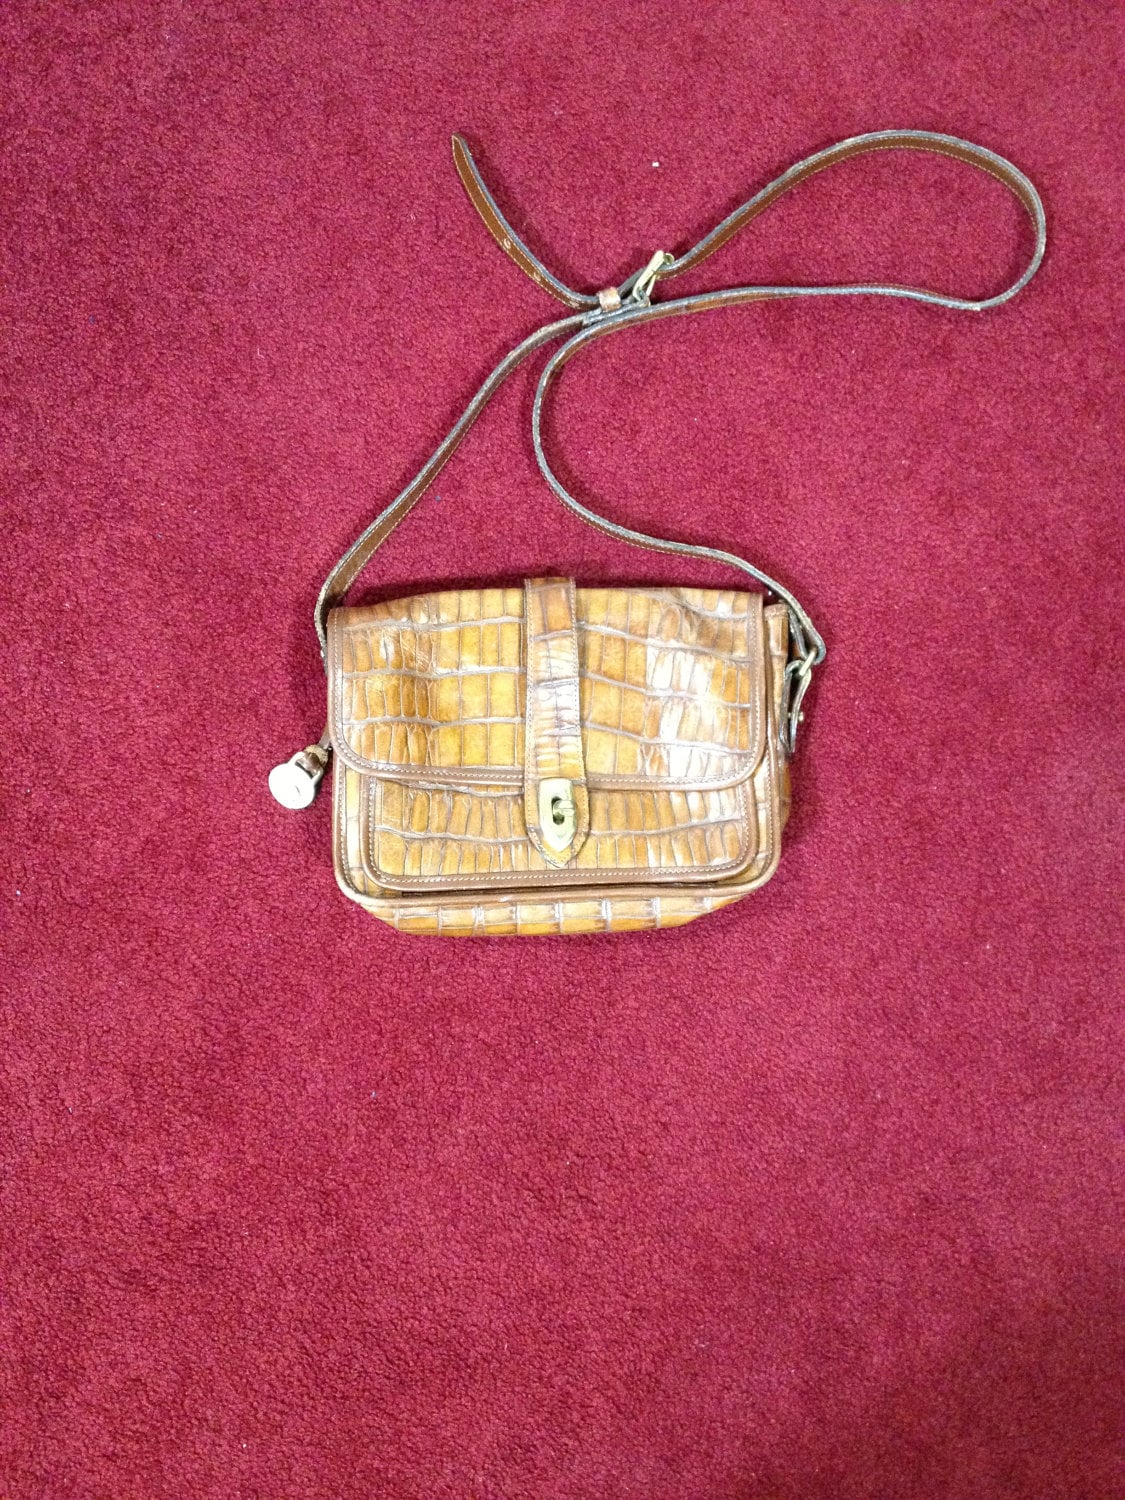 dooney and bourke leather handbag